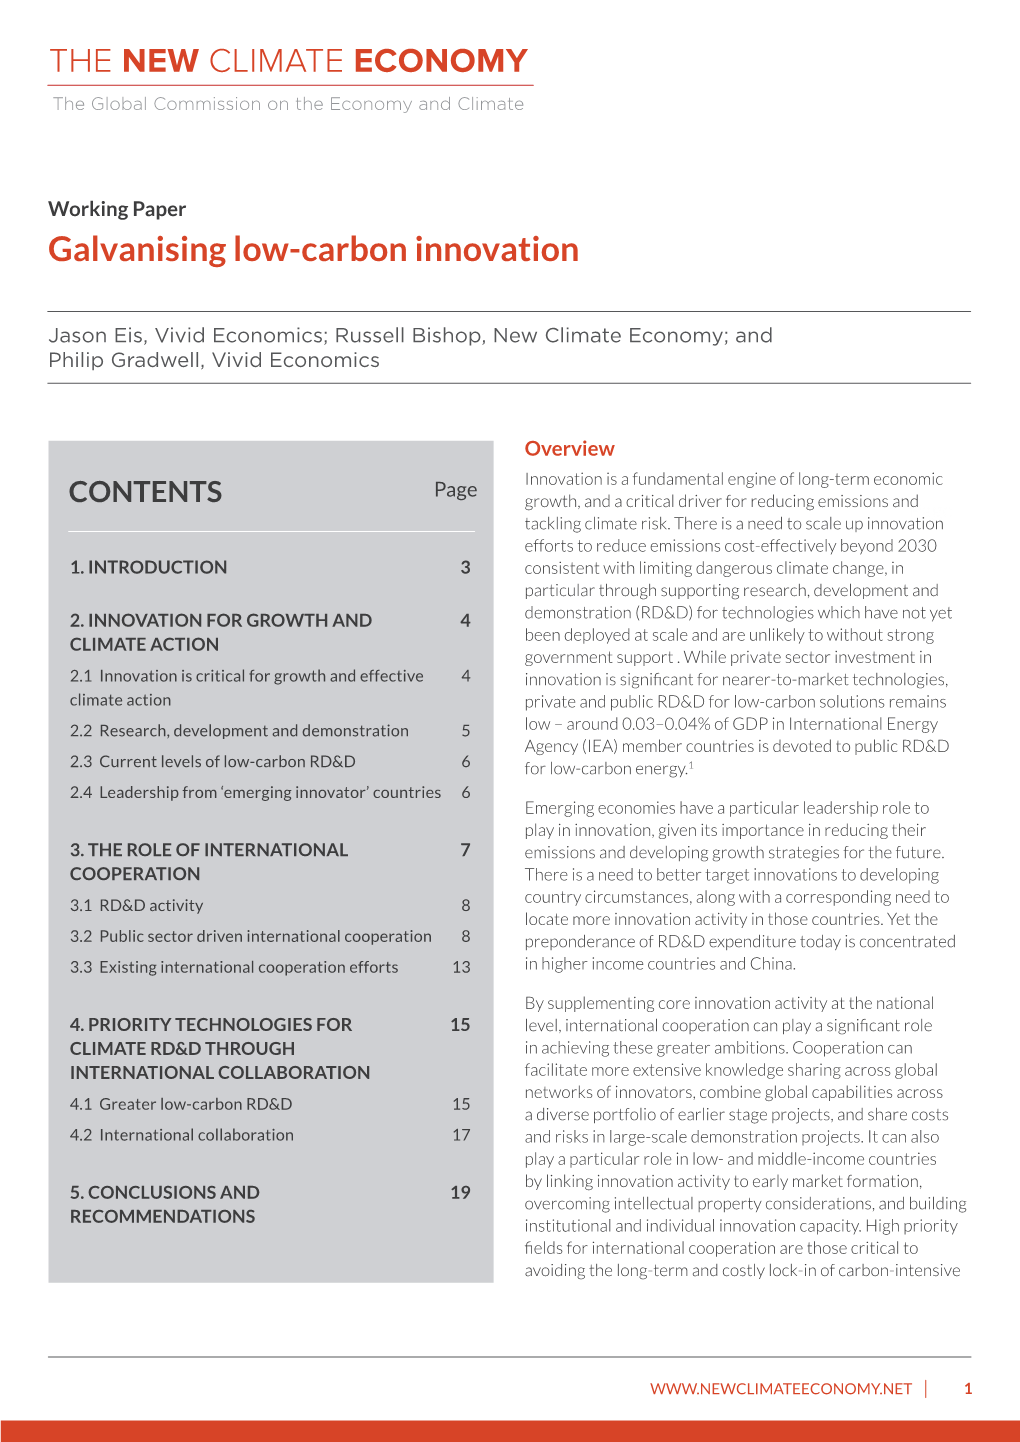 Galvanising Low-Carbon Innovation